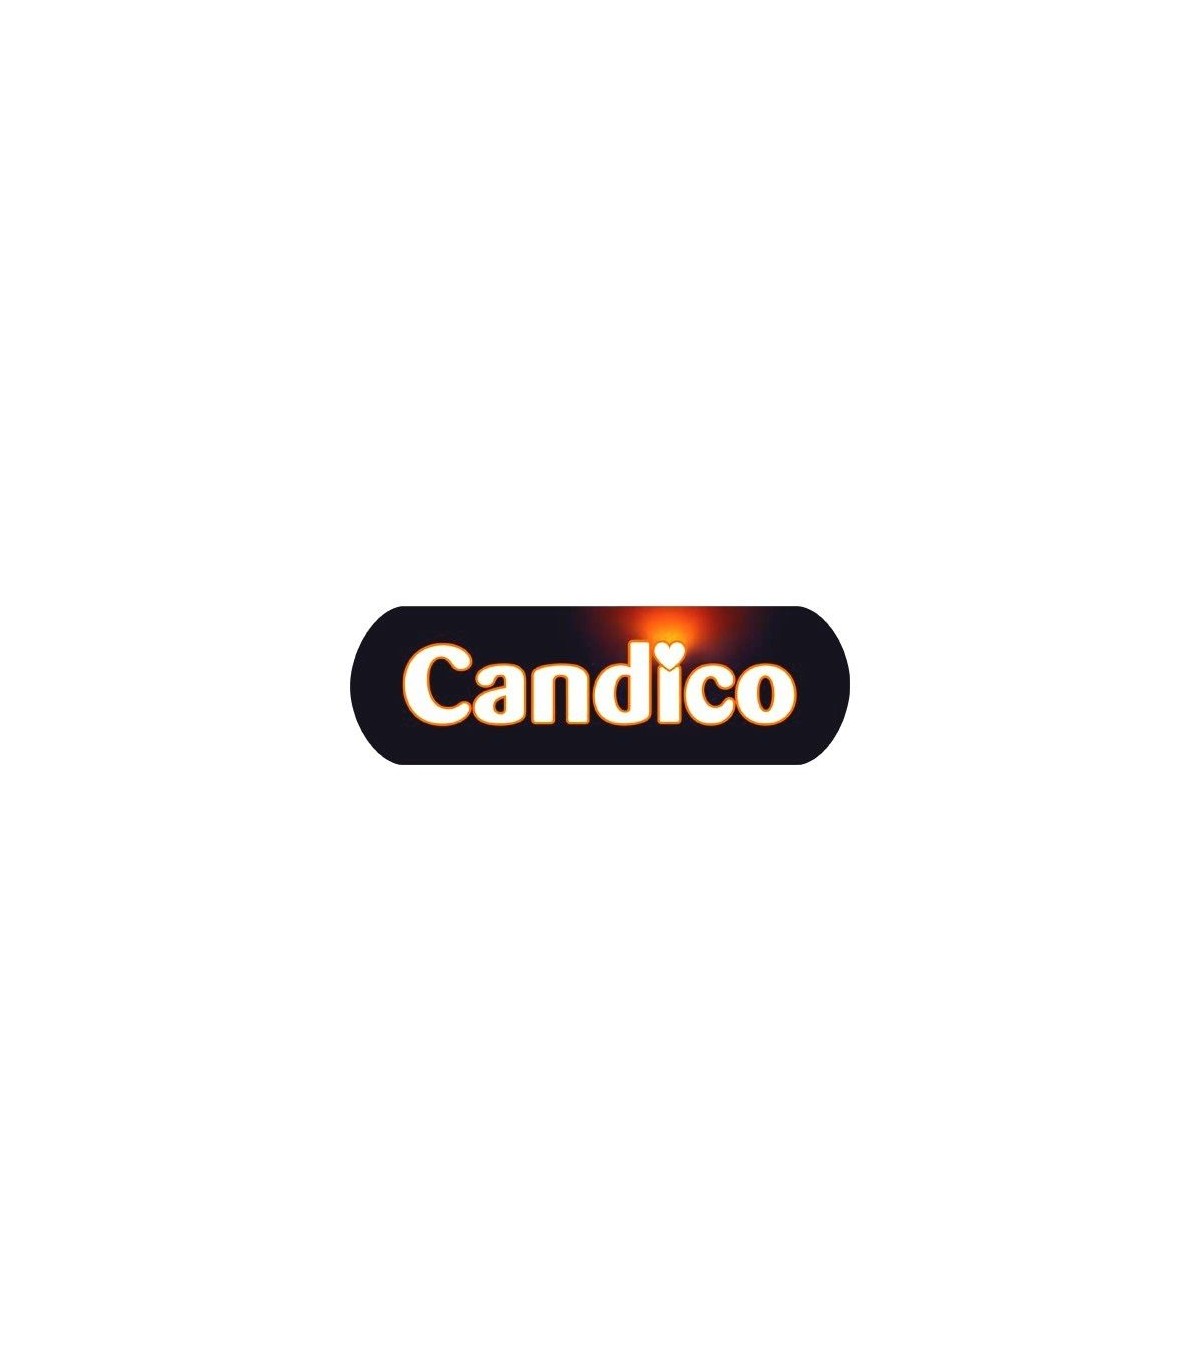 Cassonade de candi blonde 1kg Candico - Nevejan